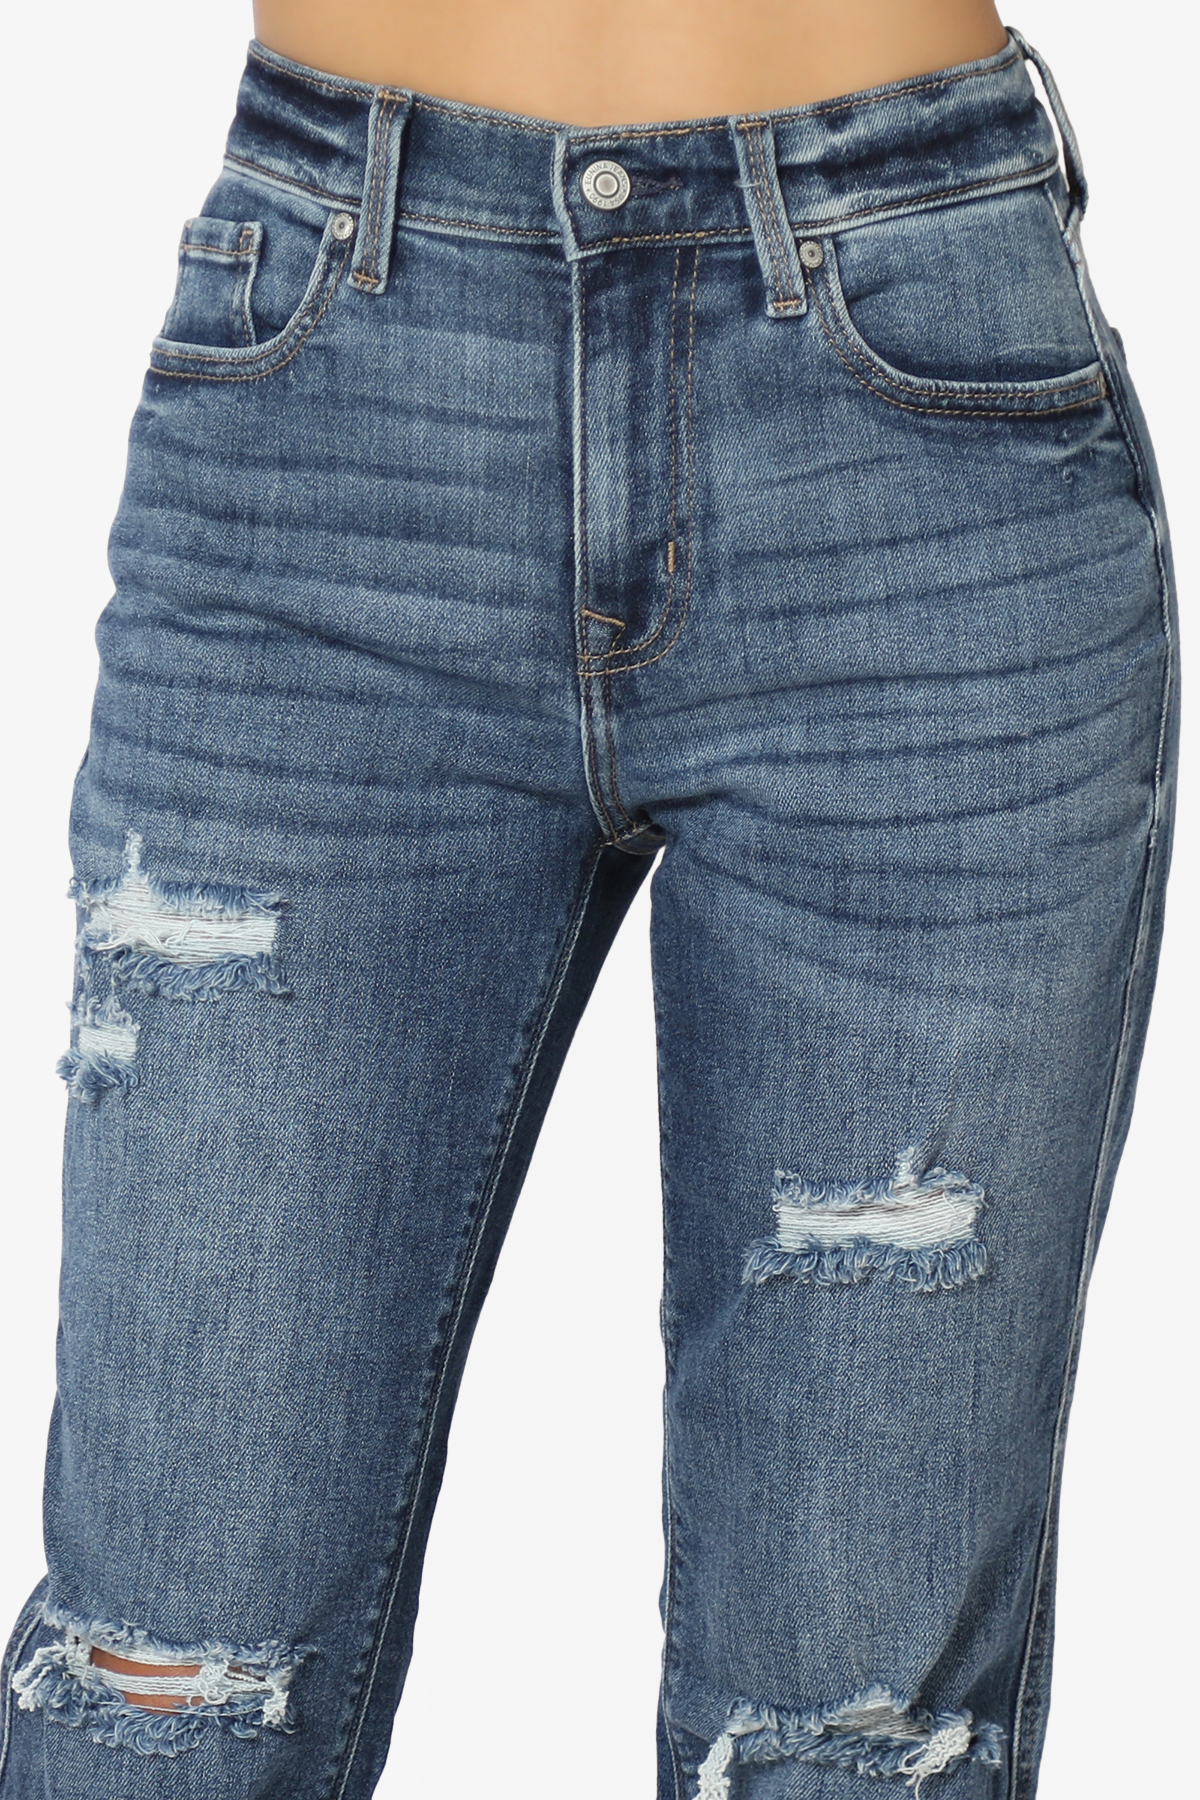 TheMogan Women's Dark Vintage Blue Wash Classic High Rise Stretch Denim Skinny Jeans - image 5 of 7